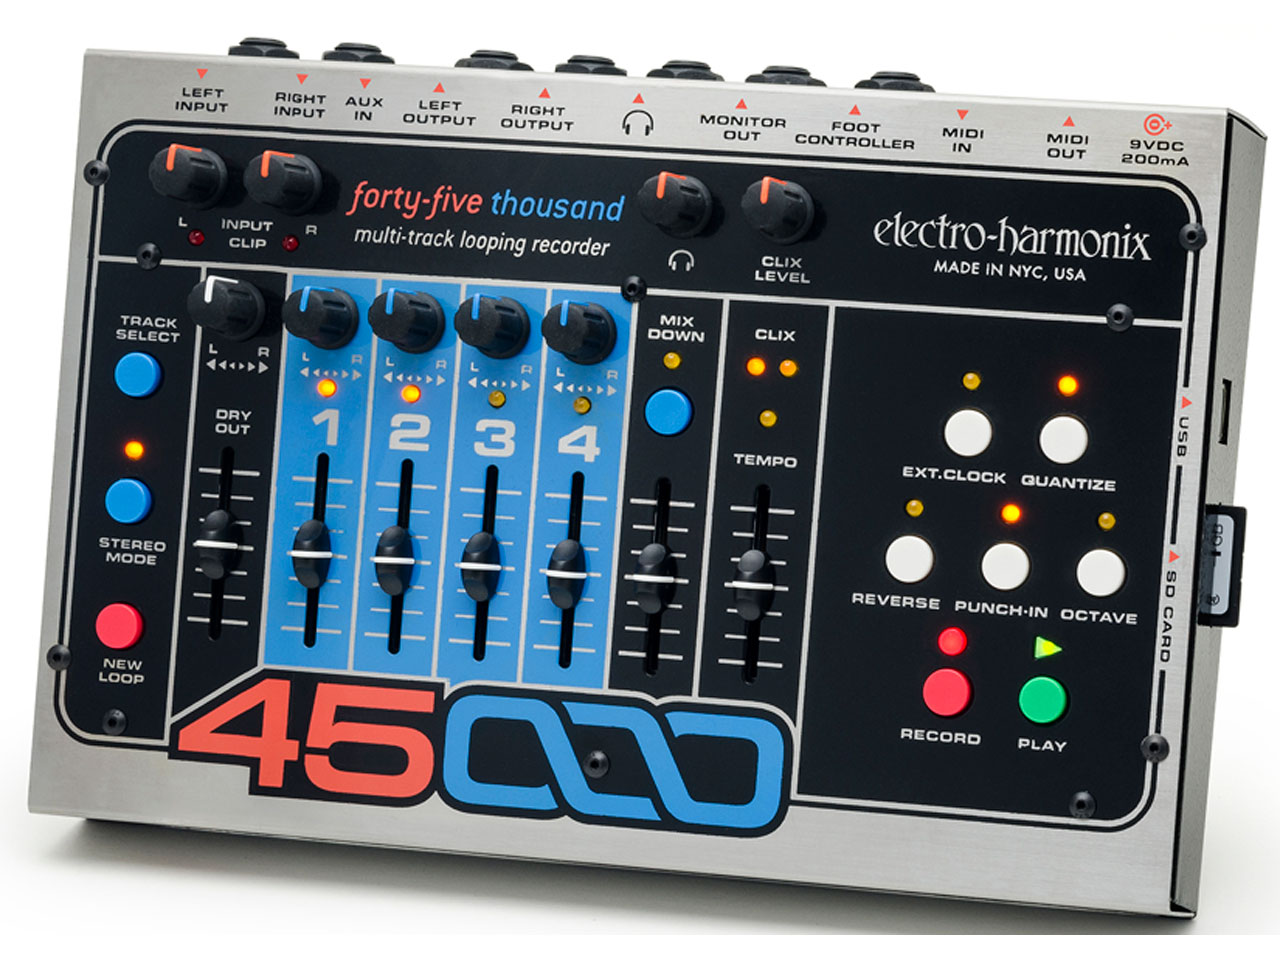 Electro-Harmonix(エレクトロハーモニックス) 45000 Multi-Track Looping Recorder (ルーパー)